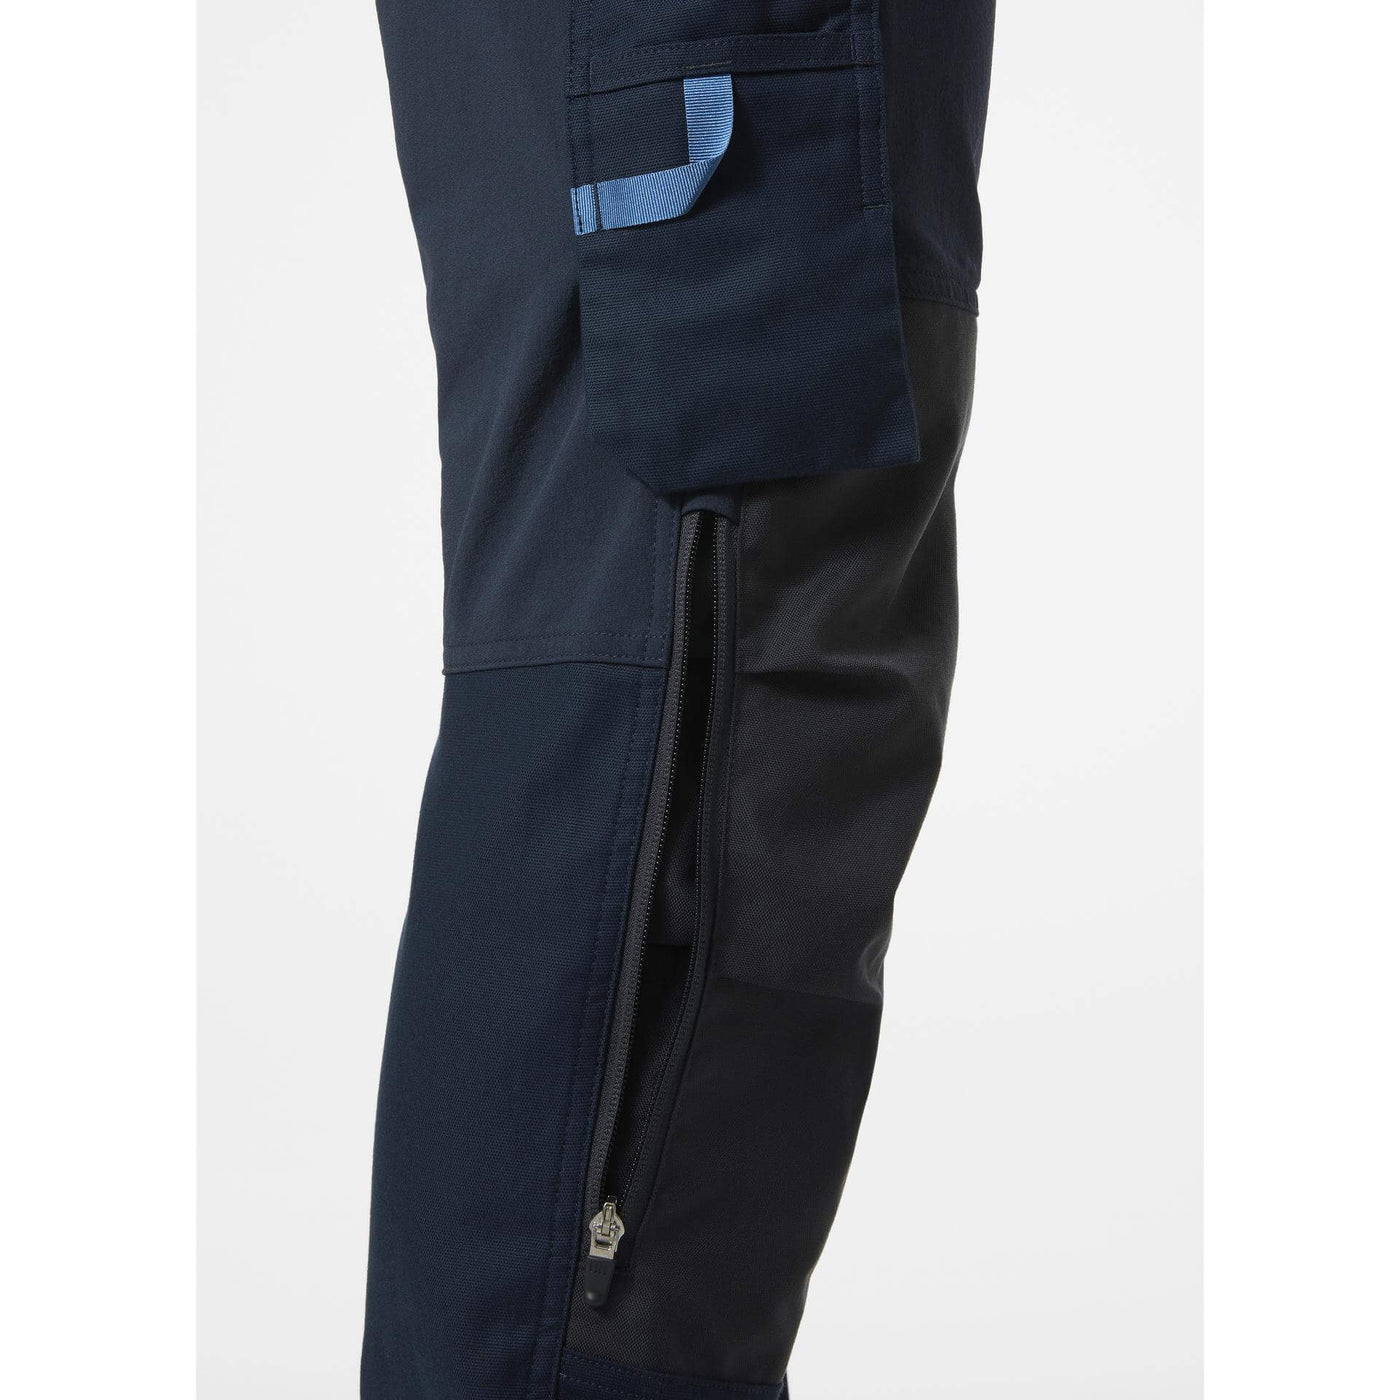 Helly Hansen Oxford 4X Stretch Work Trousers Navy/Ebony Feature 3#colour_navy-ebony